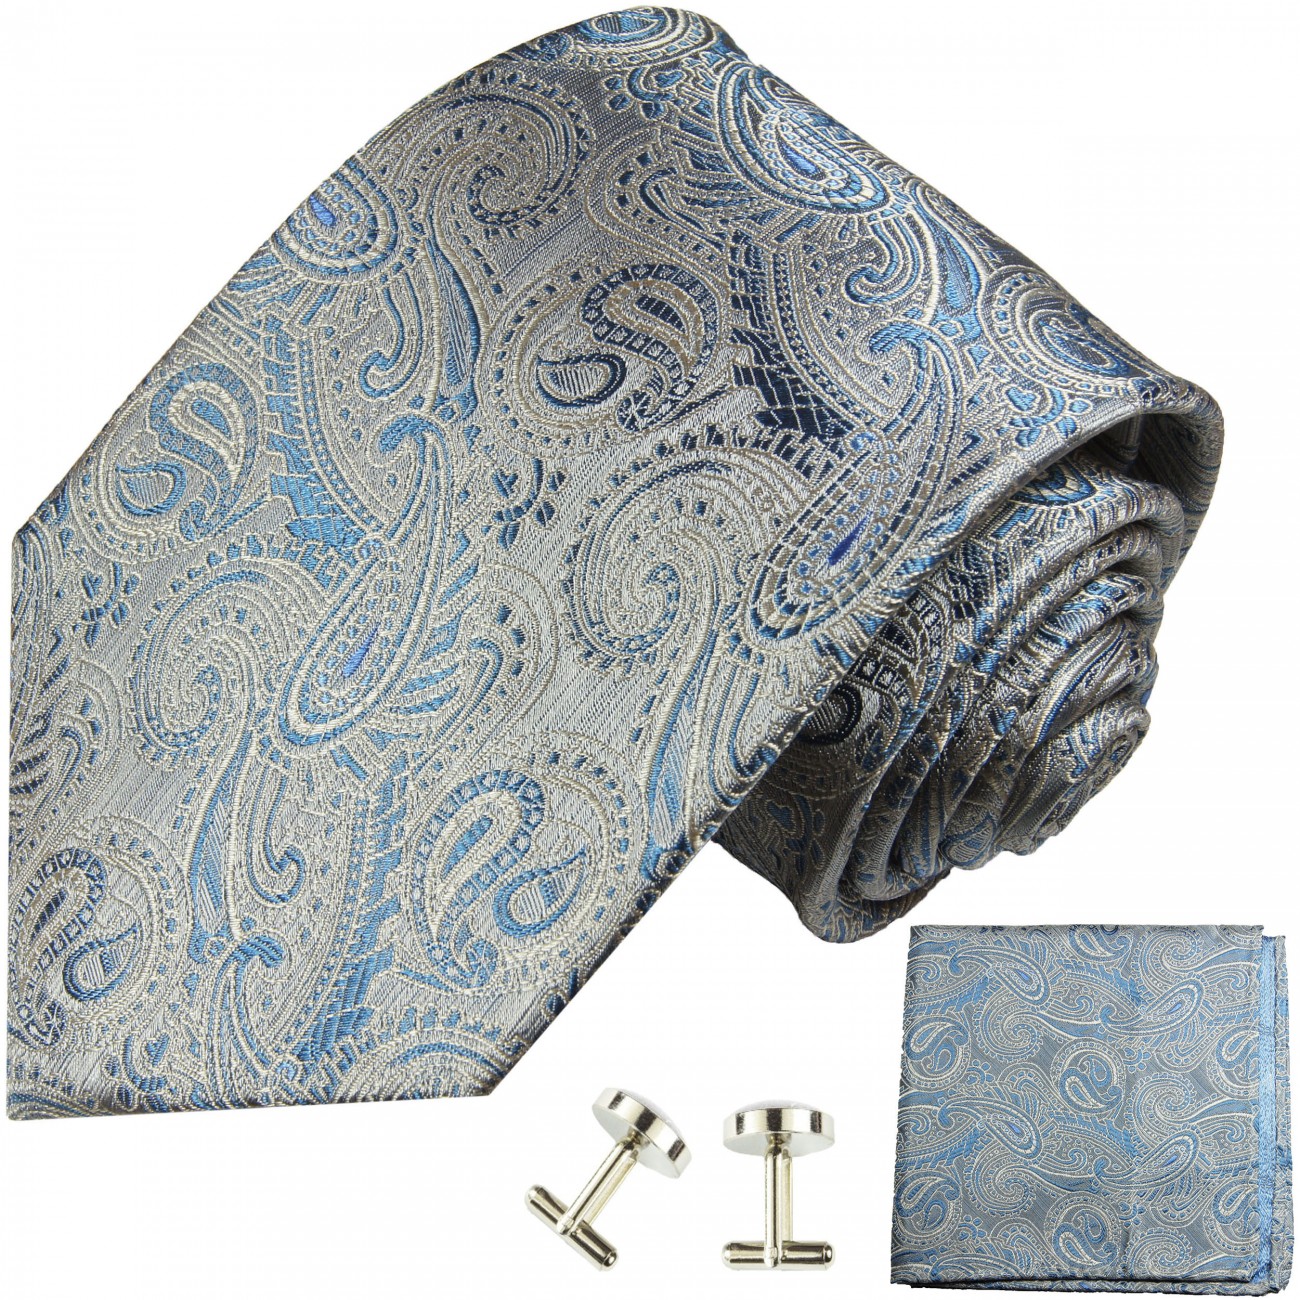 Krawatte blau grau paisley brokat Seide 2000